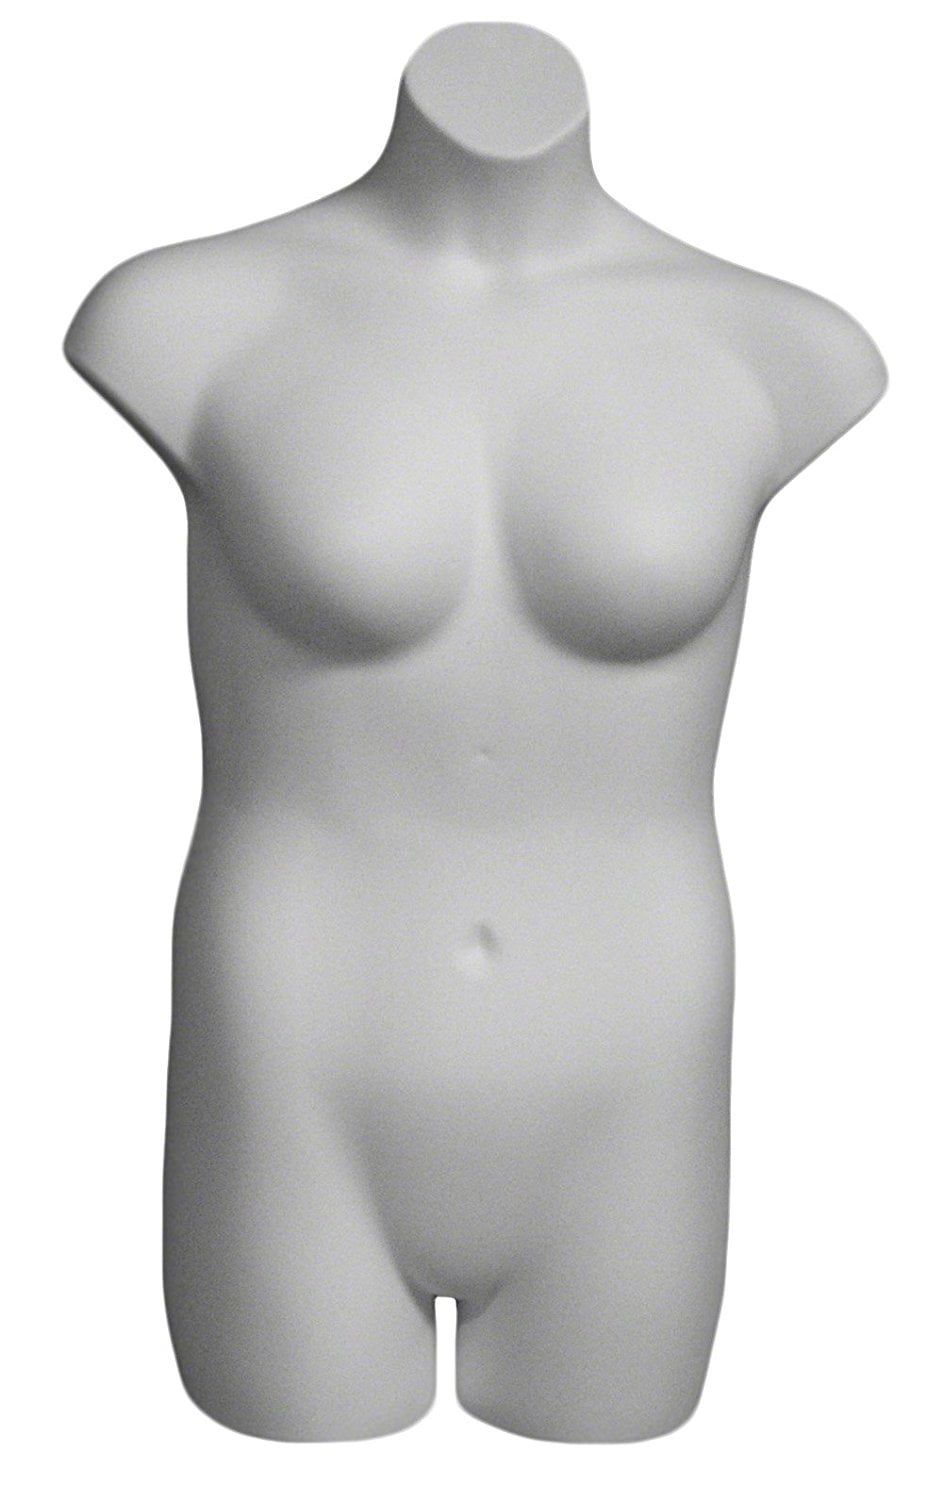 White Plus-Size Female Body Form 